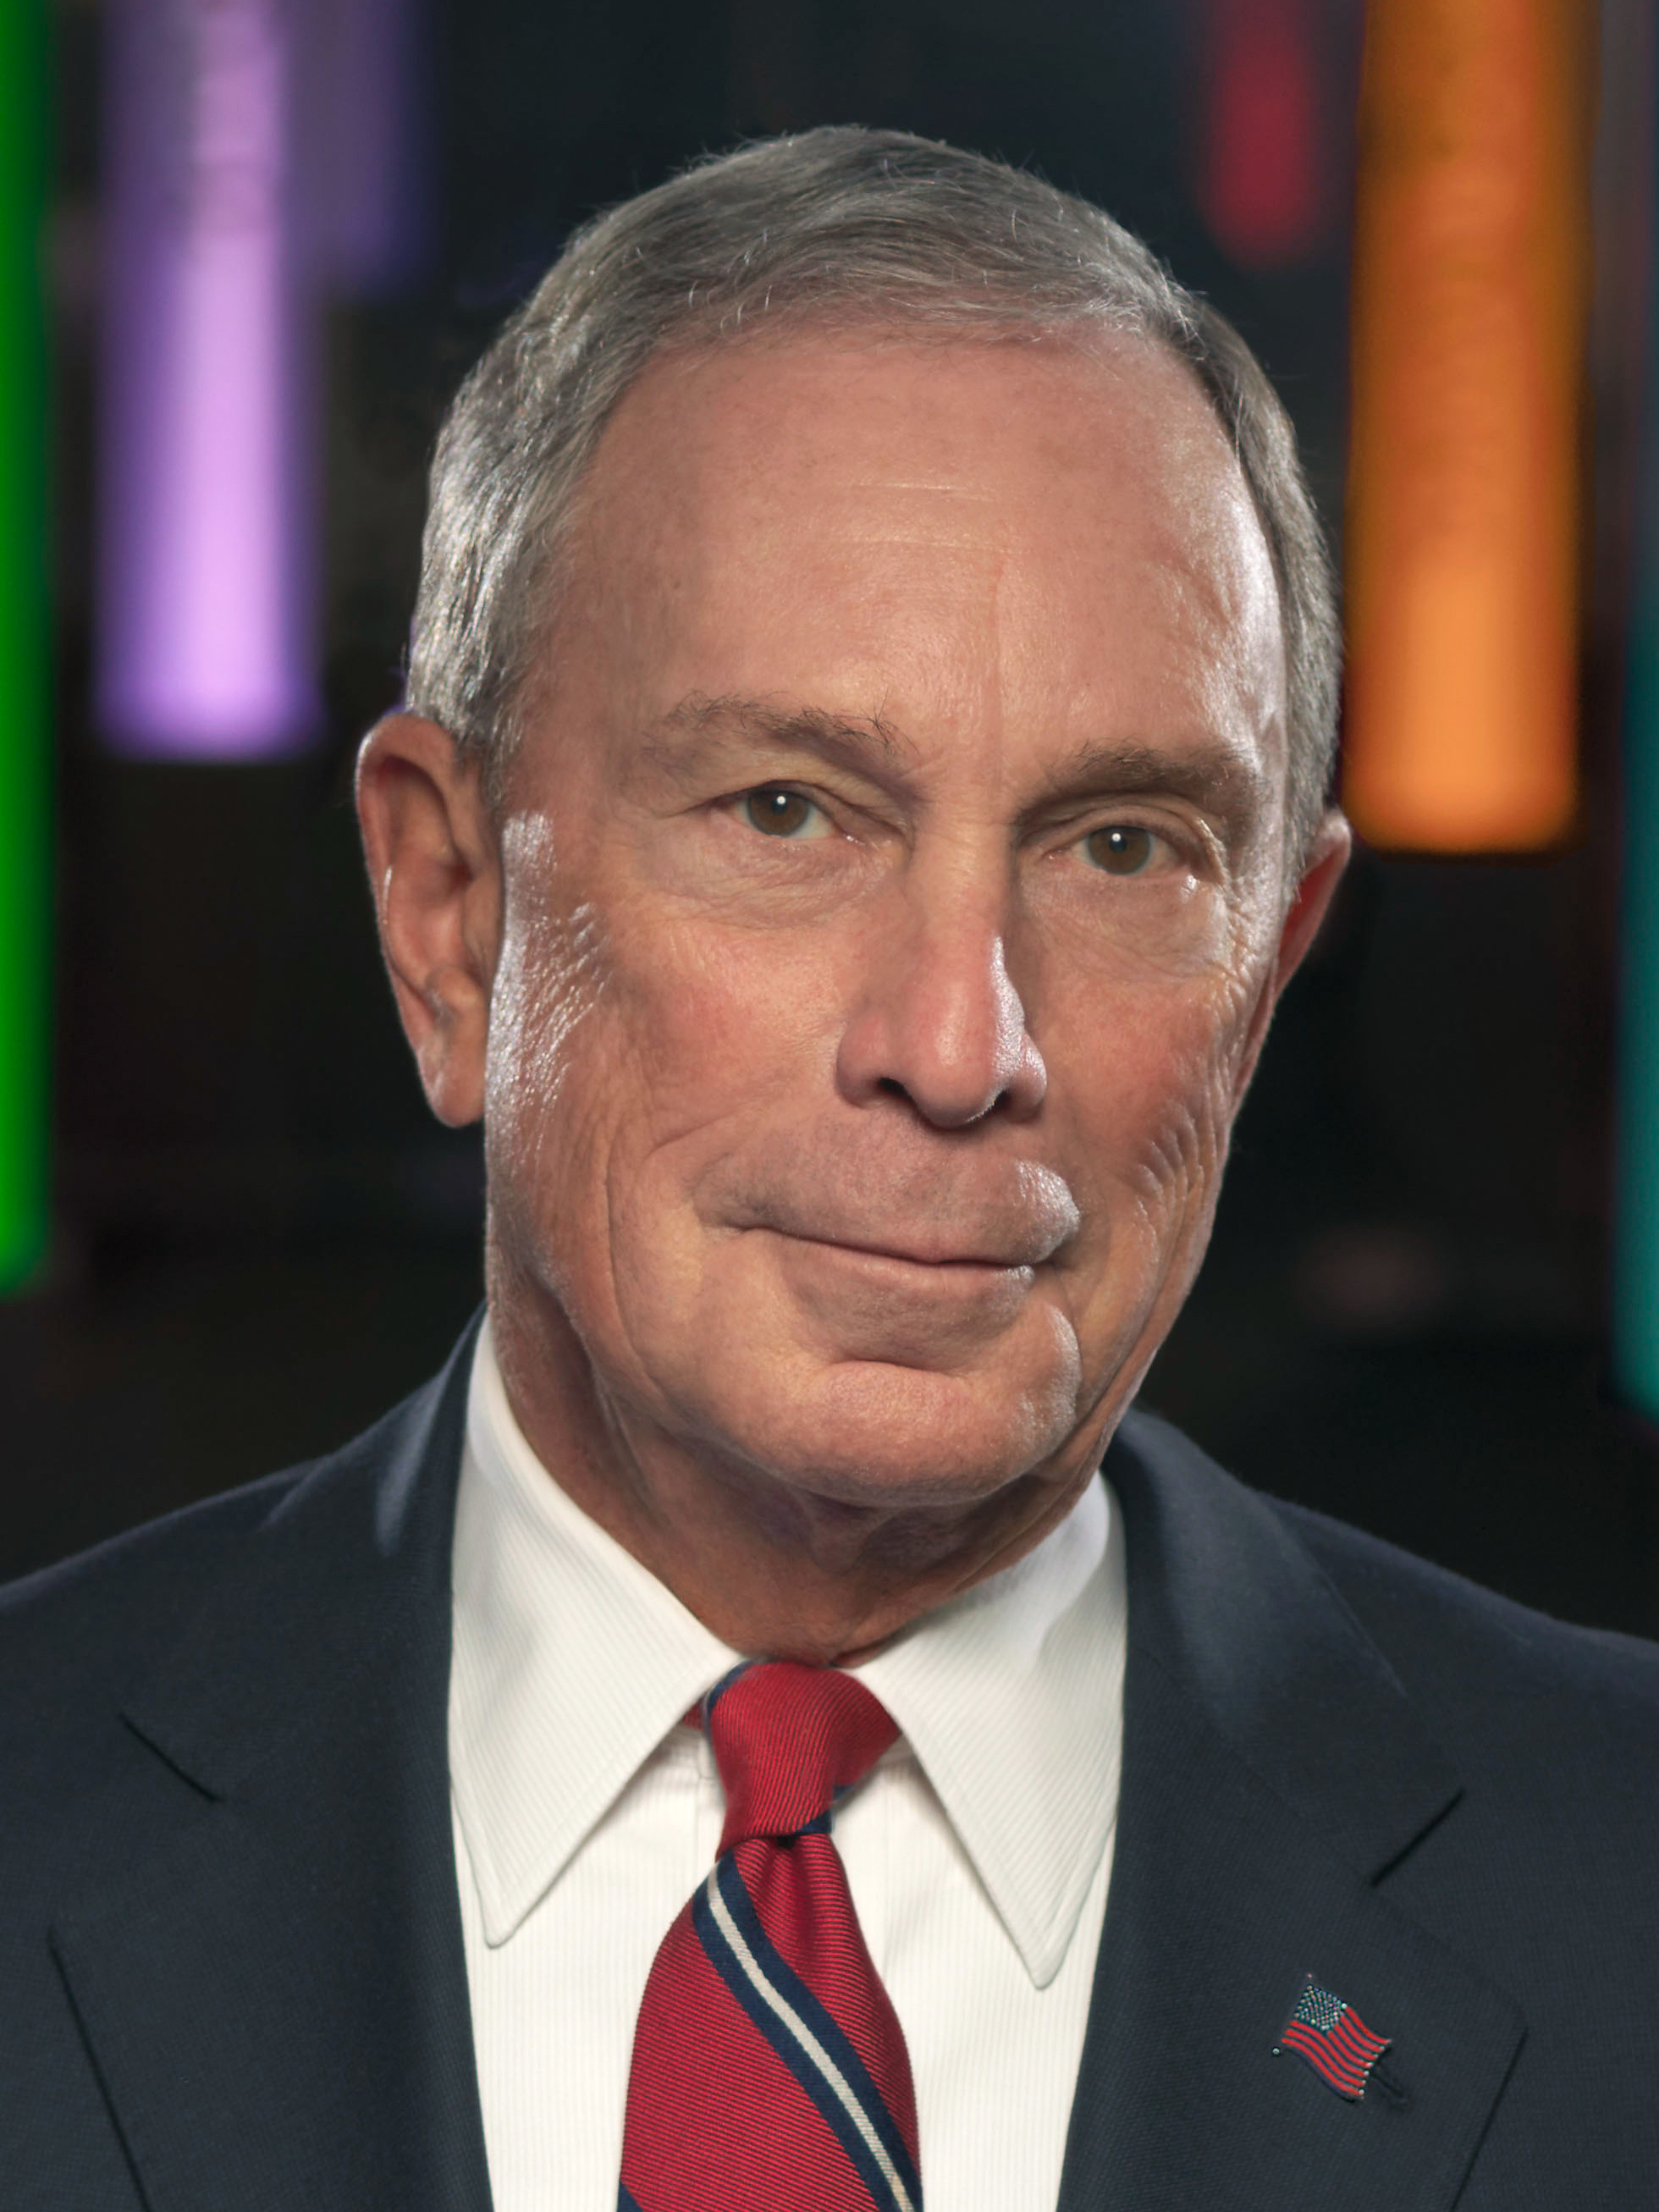 Michael Bloomberg photo #97230, Michael Bloomberg image